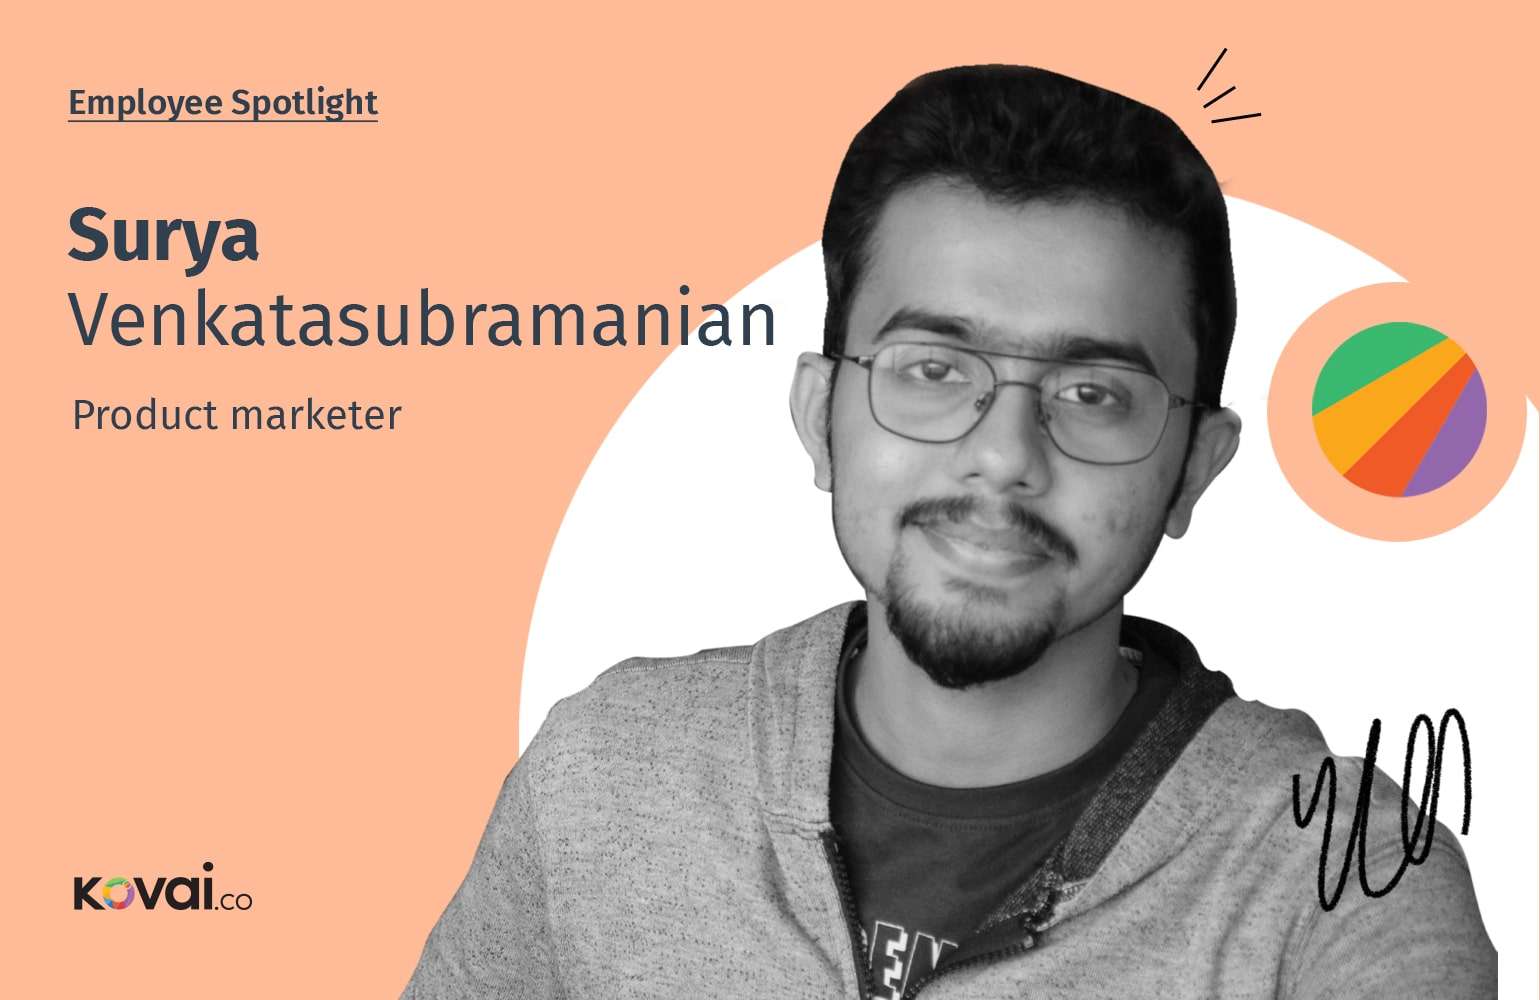 Surya Venkatasubramanian: Employee Spotlight